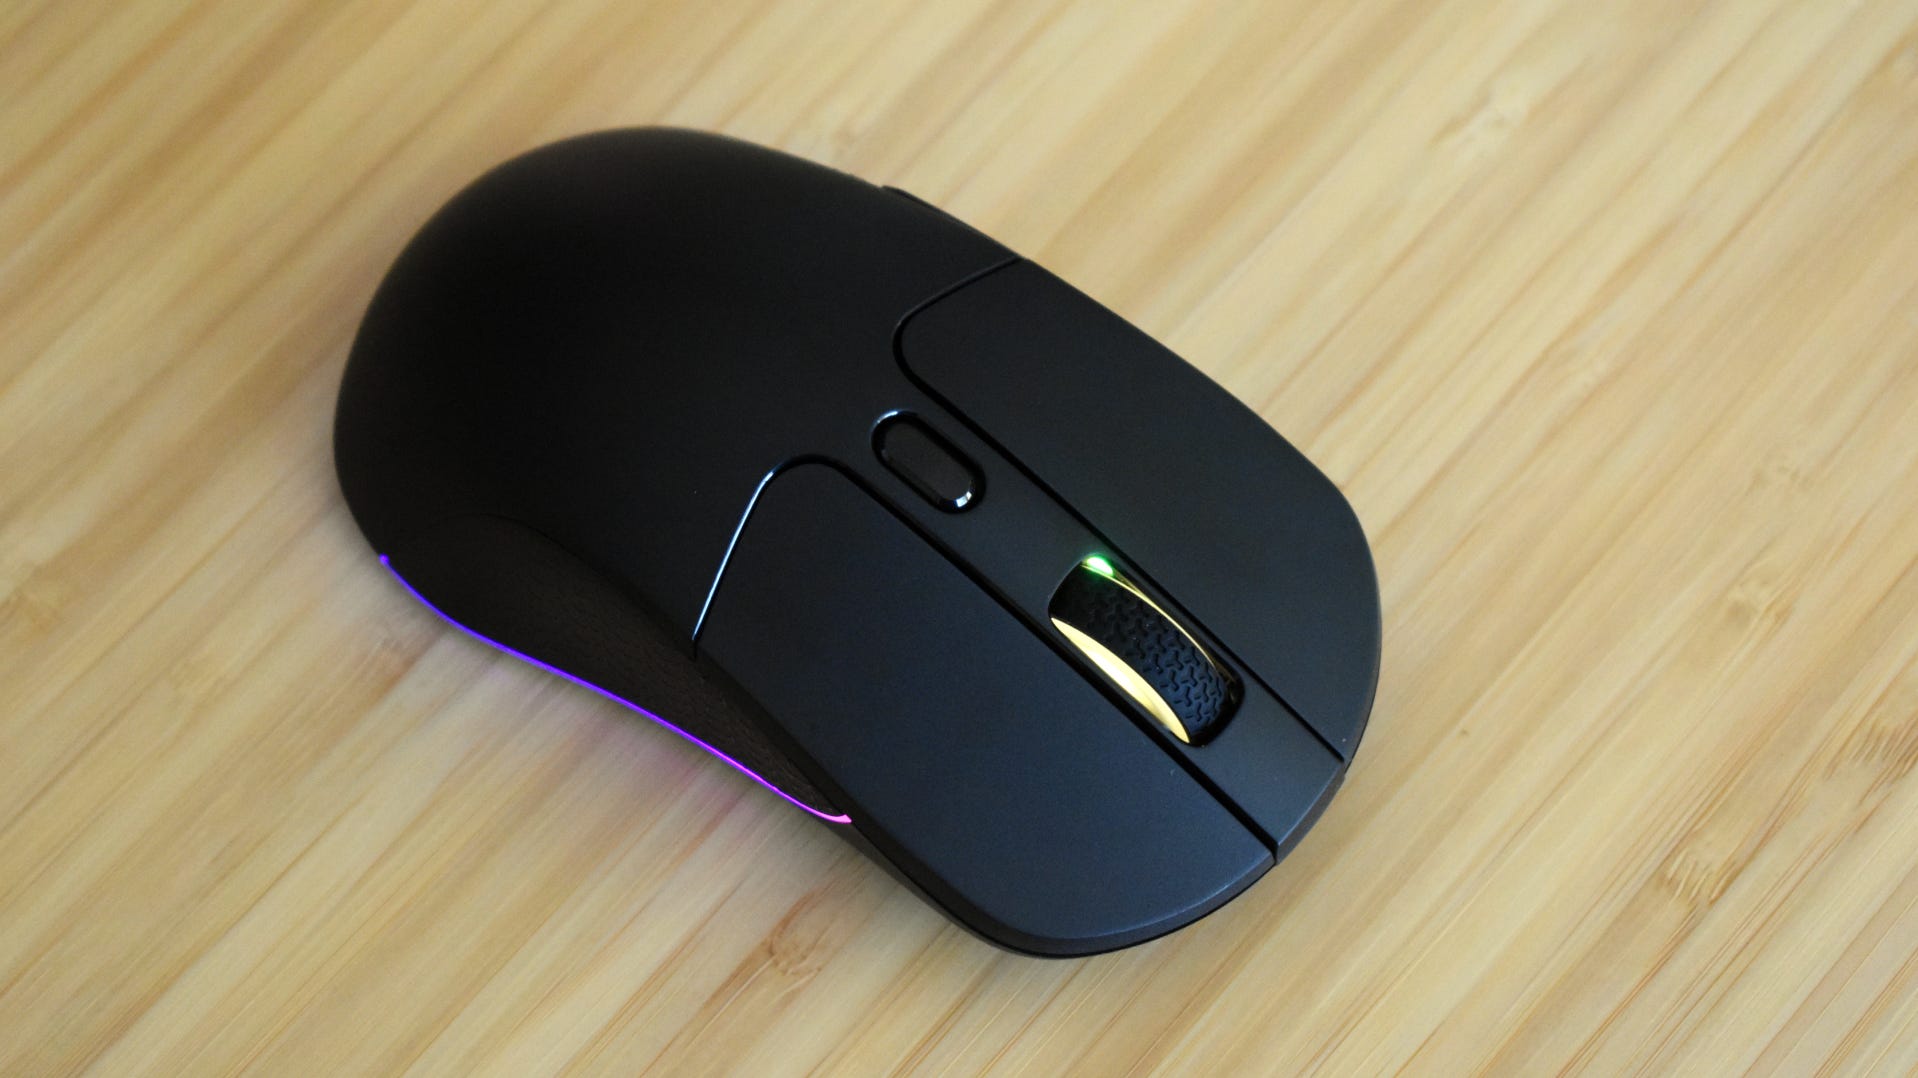 Keychron M3 Gaming mouse resting on wood desktop